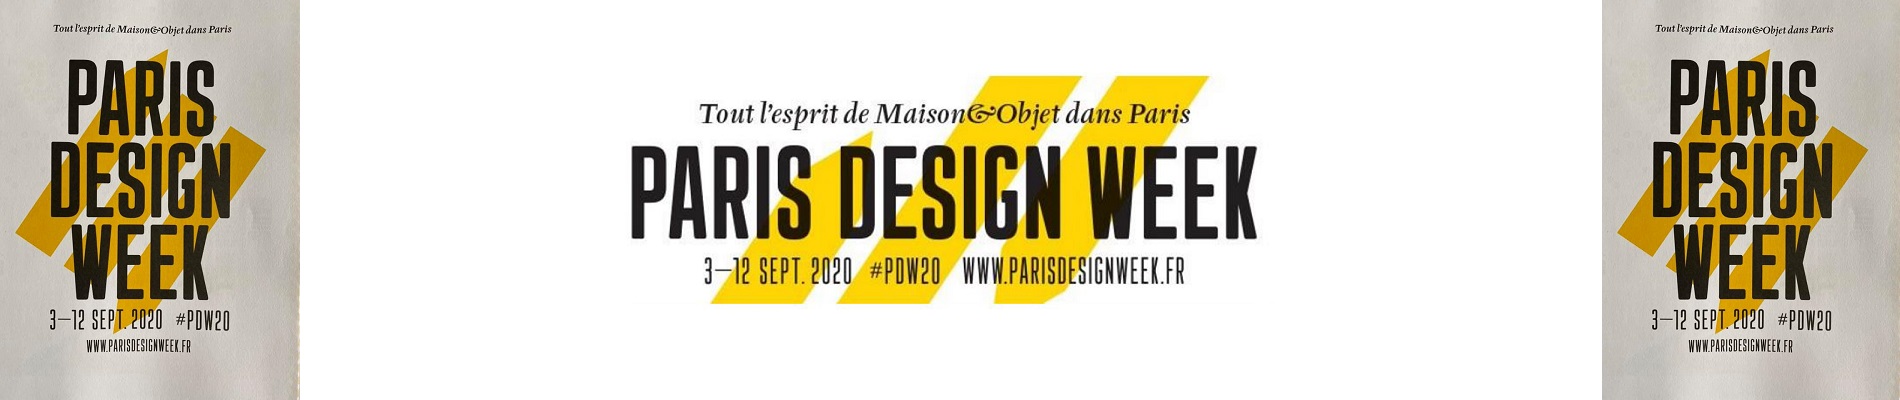 Paris Design Week 2020